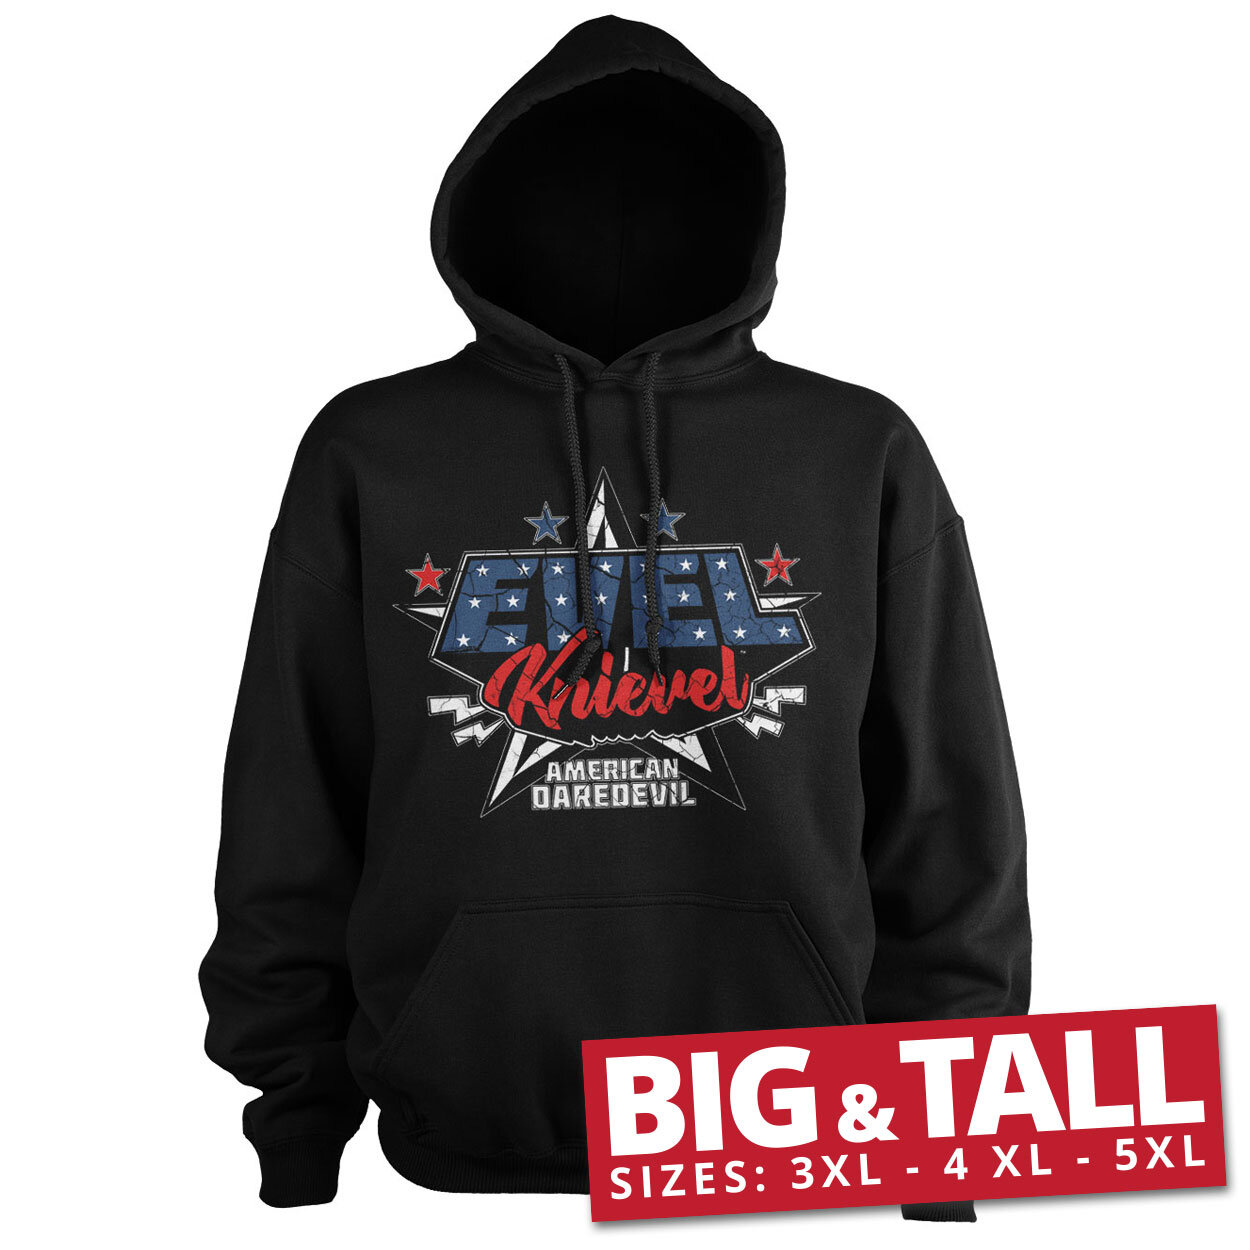 Evel Knievel - American Daredevil Big & Tall Hoodie